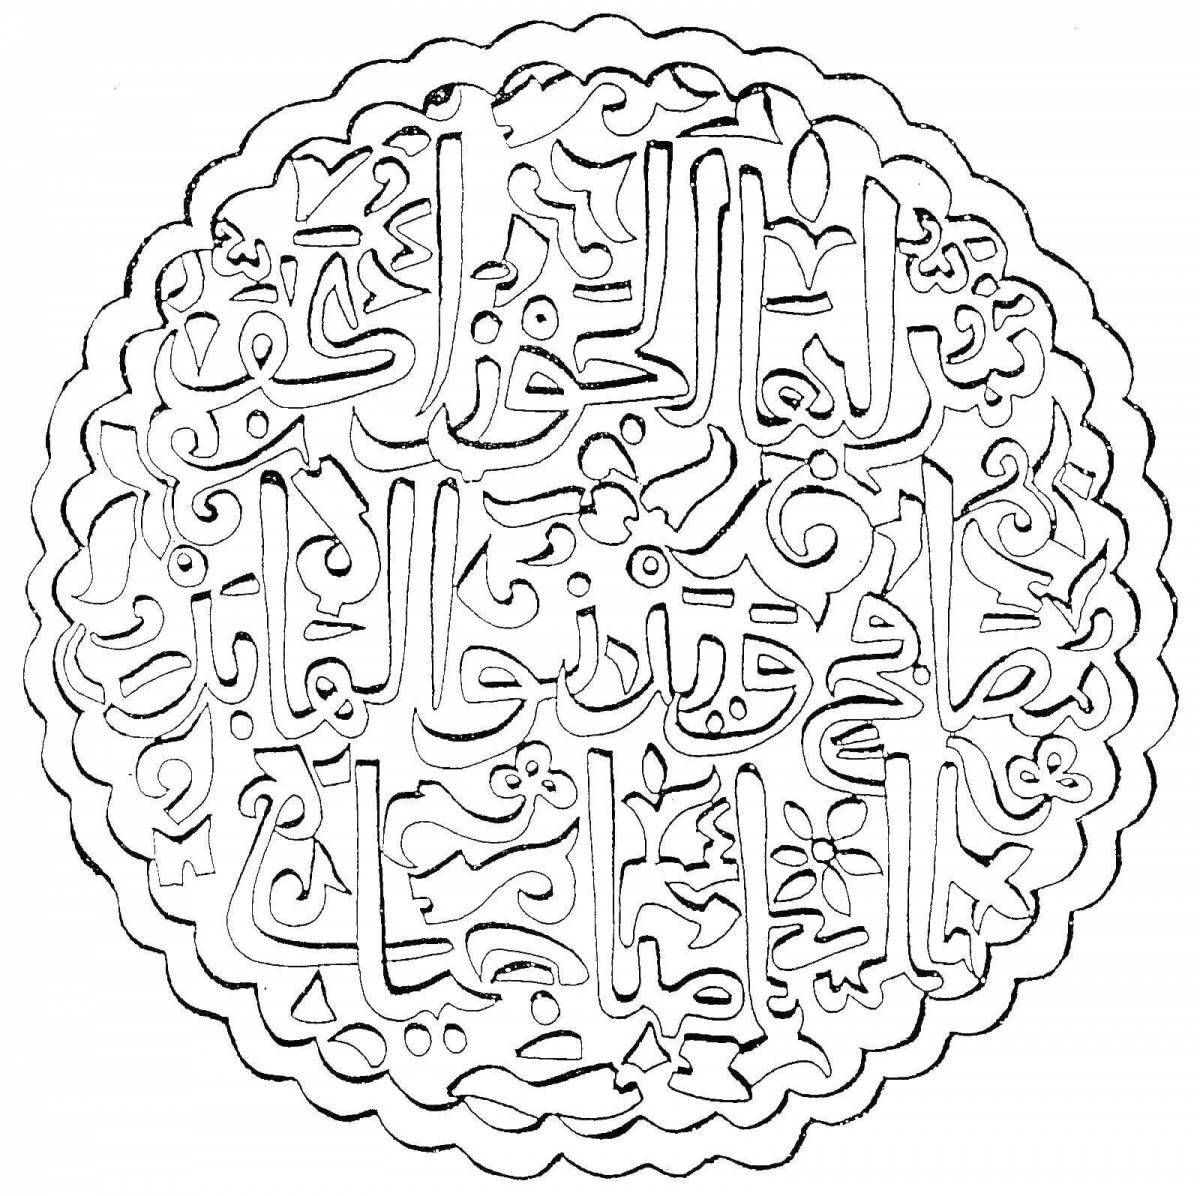 Shiny islamic coloring book